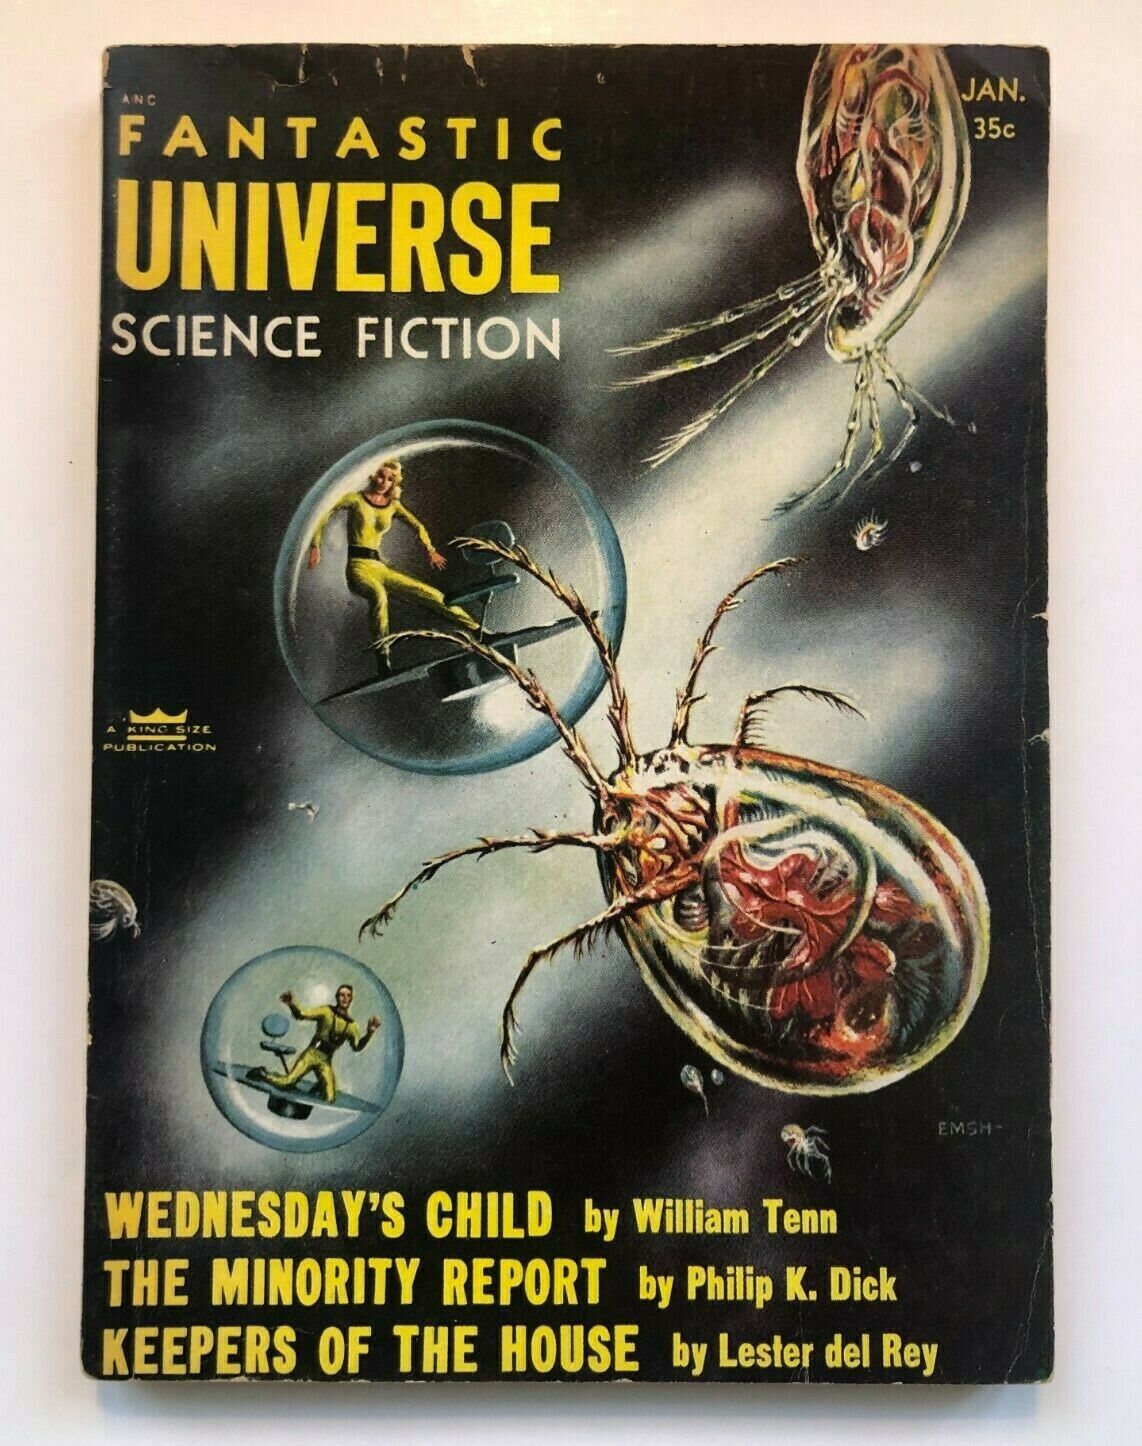 FANTASTIC UNIVERSE PHILIP K DICK MINORITY REPORT JAN 1956 COVER by Ed Emshwiller